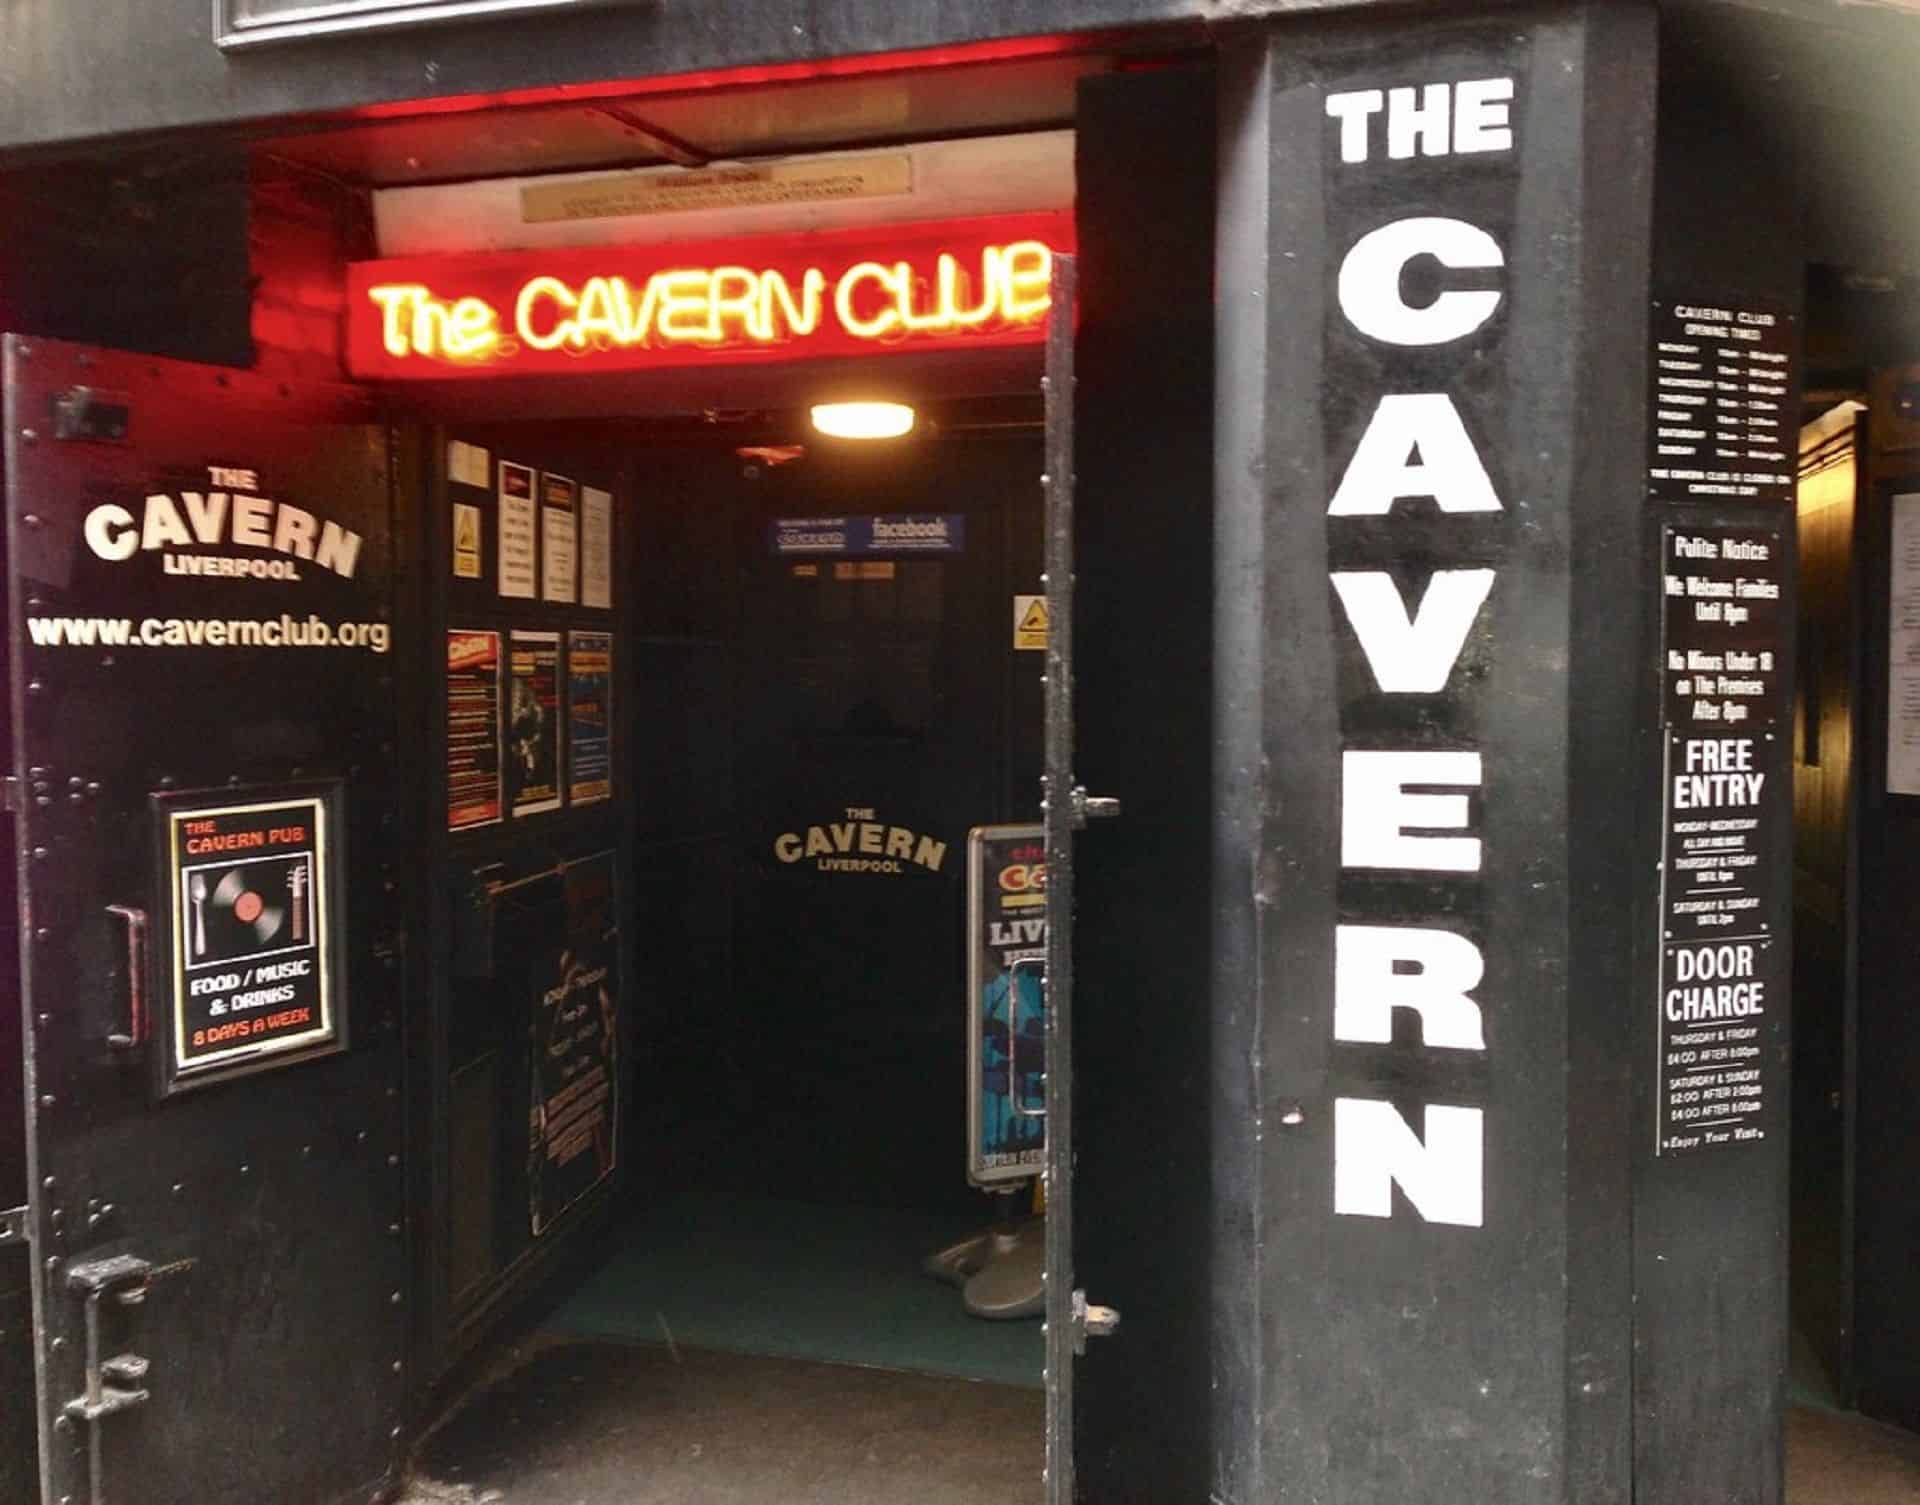 The Cavern Club in UK